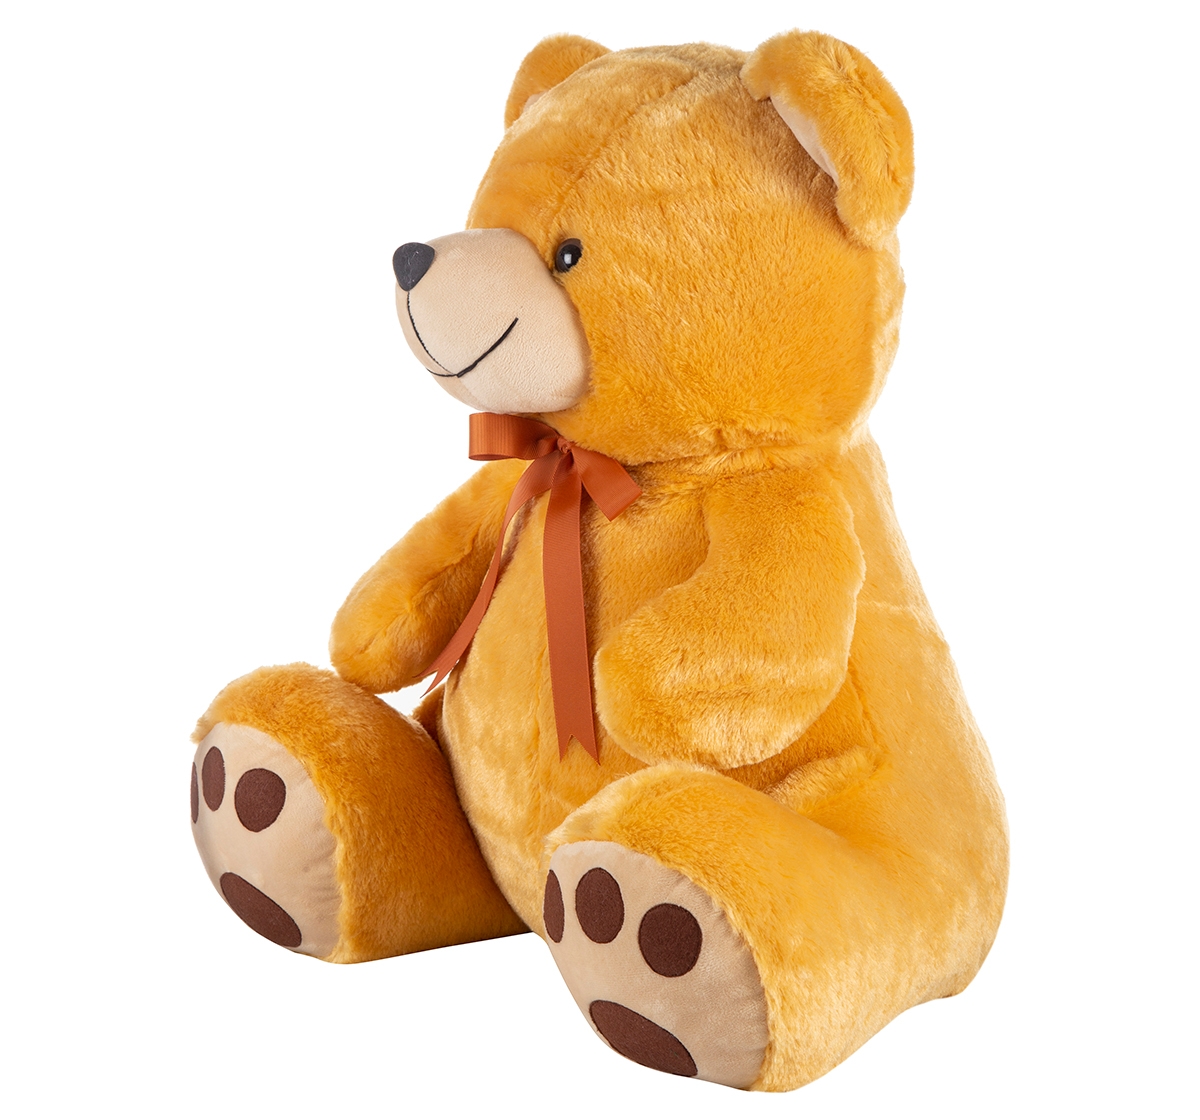 Mirada | Mirada 55cm jumbo teddy bear soft toy Multicolor 3Y+ 1